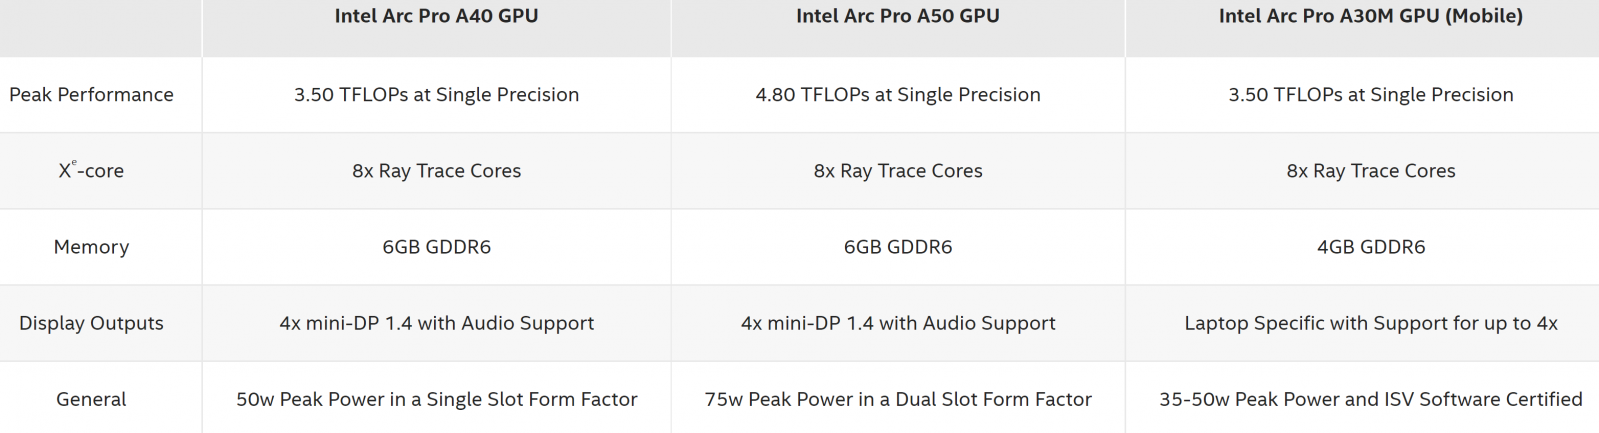 Intel-ARC-PRO-GPUS-Specs.png